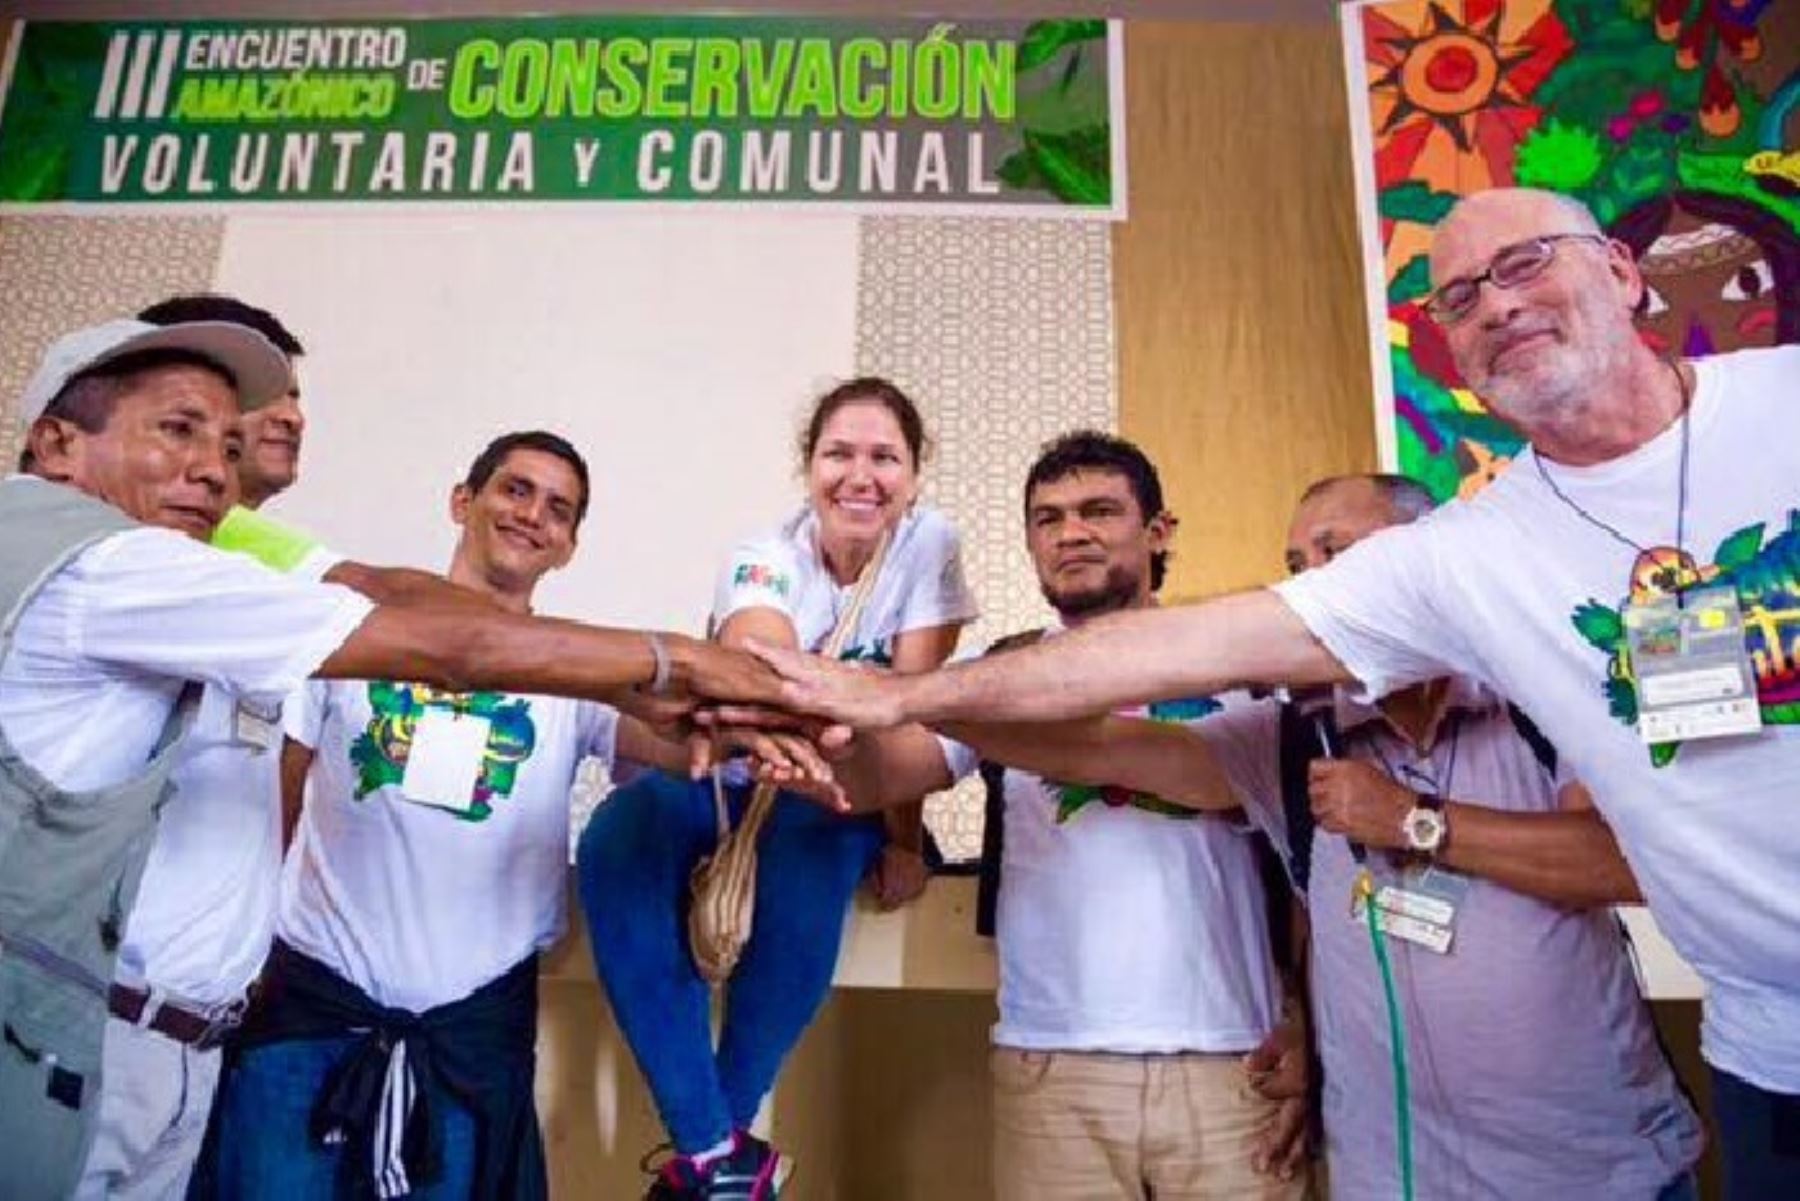 San Martín: crearán Red Amazónica de conservación voluntaria y comunal. ANDINA/Difusión